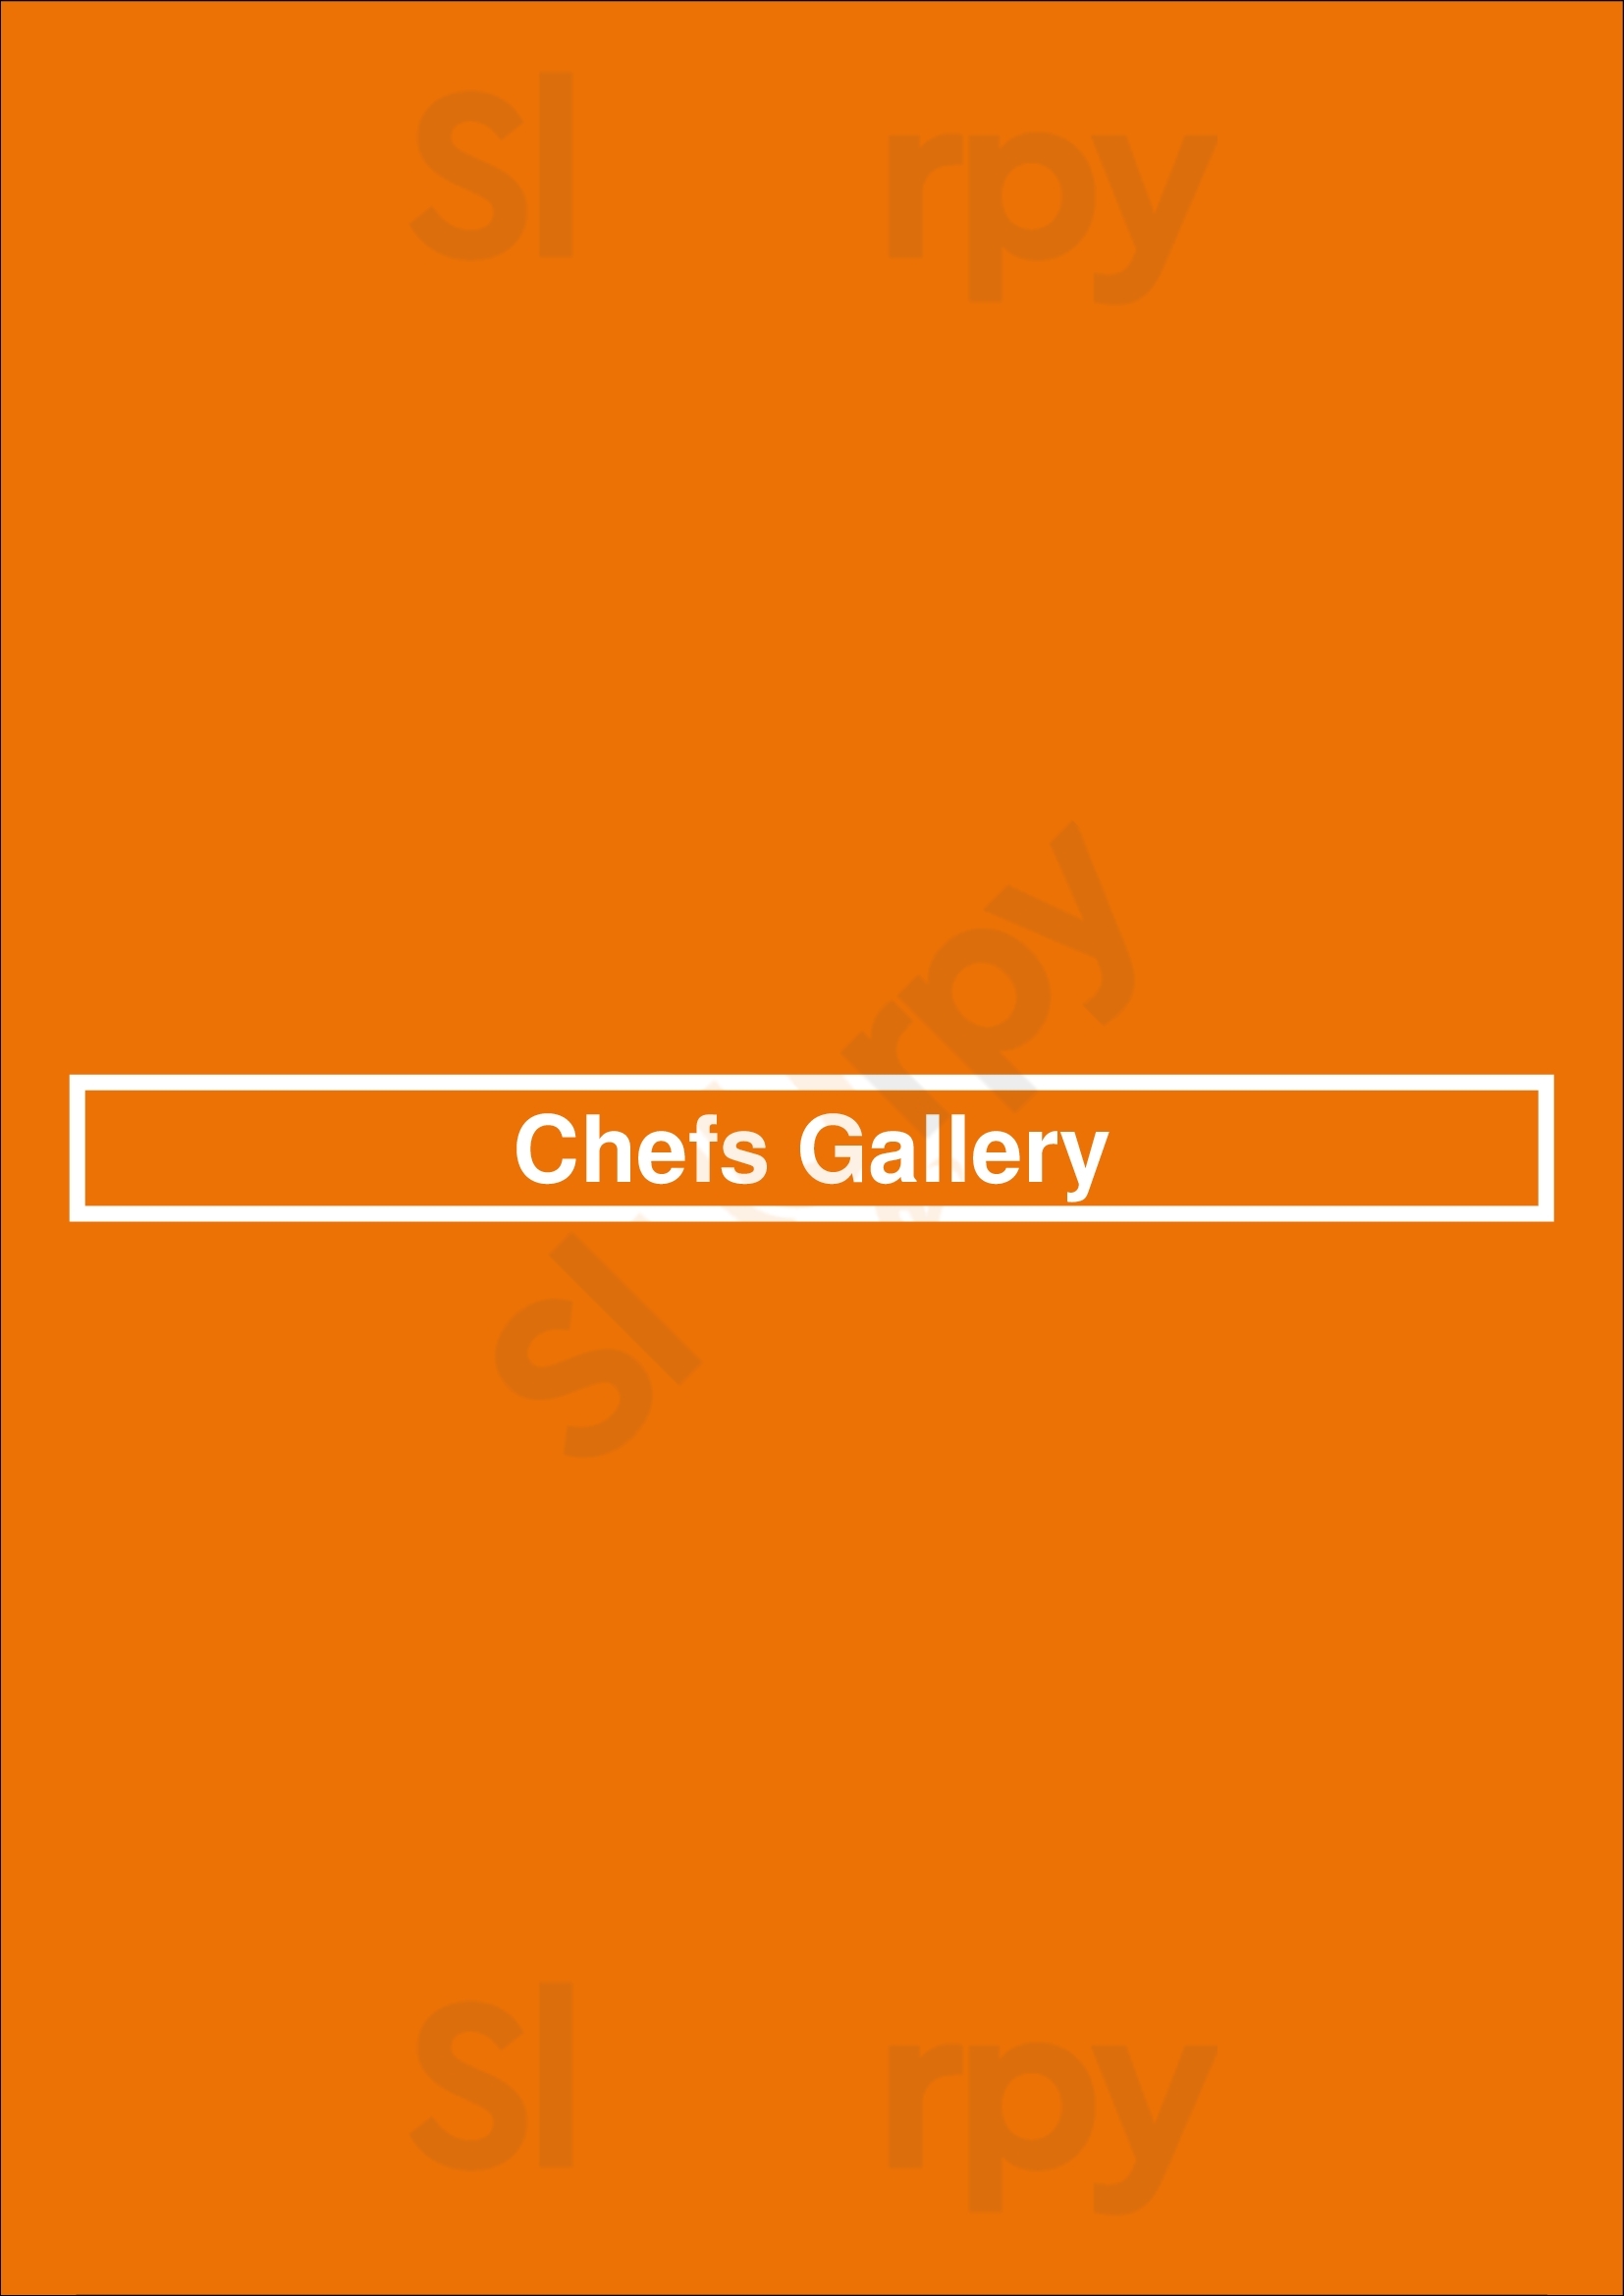 Chefs Gallery Sydney Menu - 1